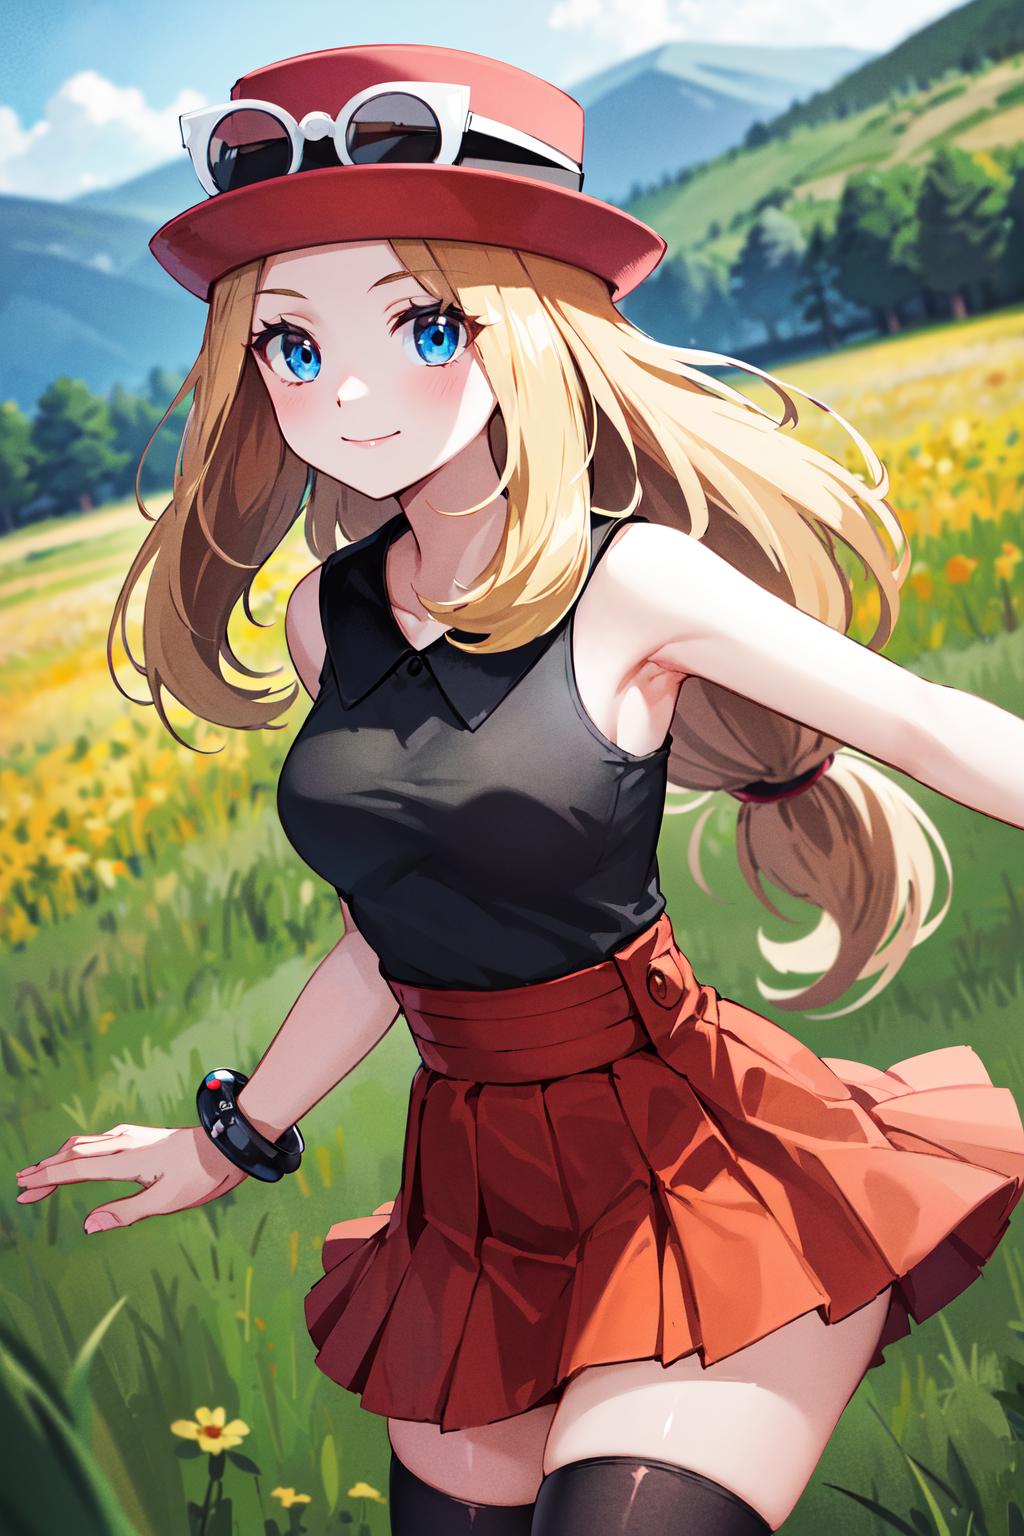 Serena セレナ / Pokemon image by h_madoka